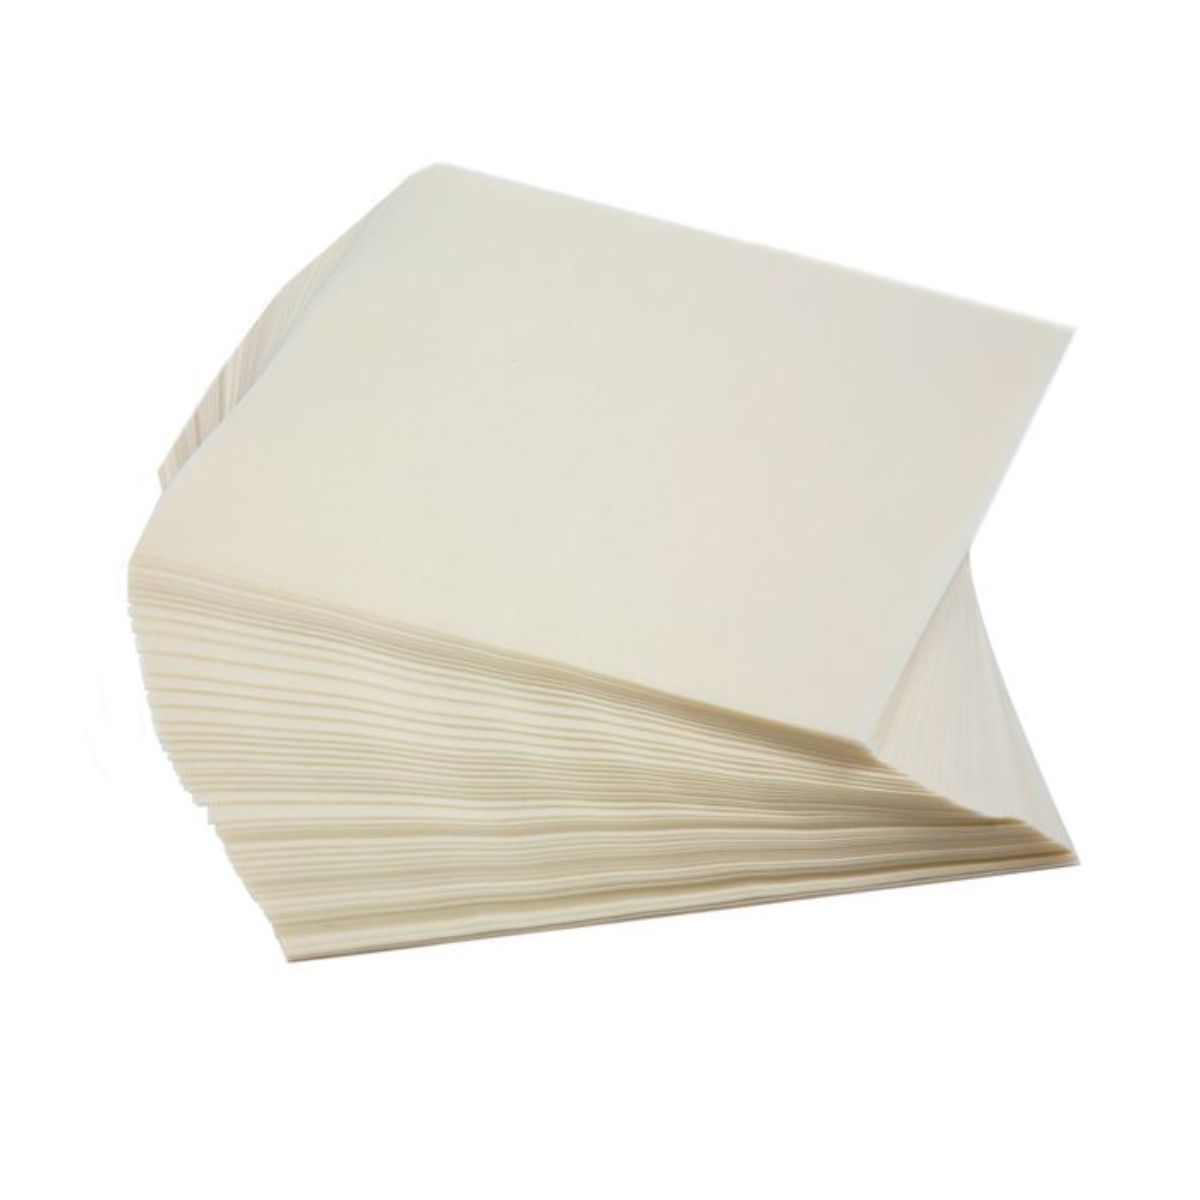 Norpro 6" Wax Paper Squares 250ct